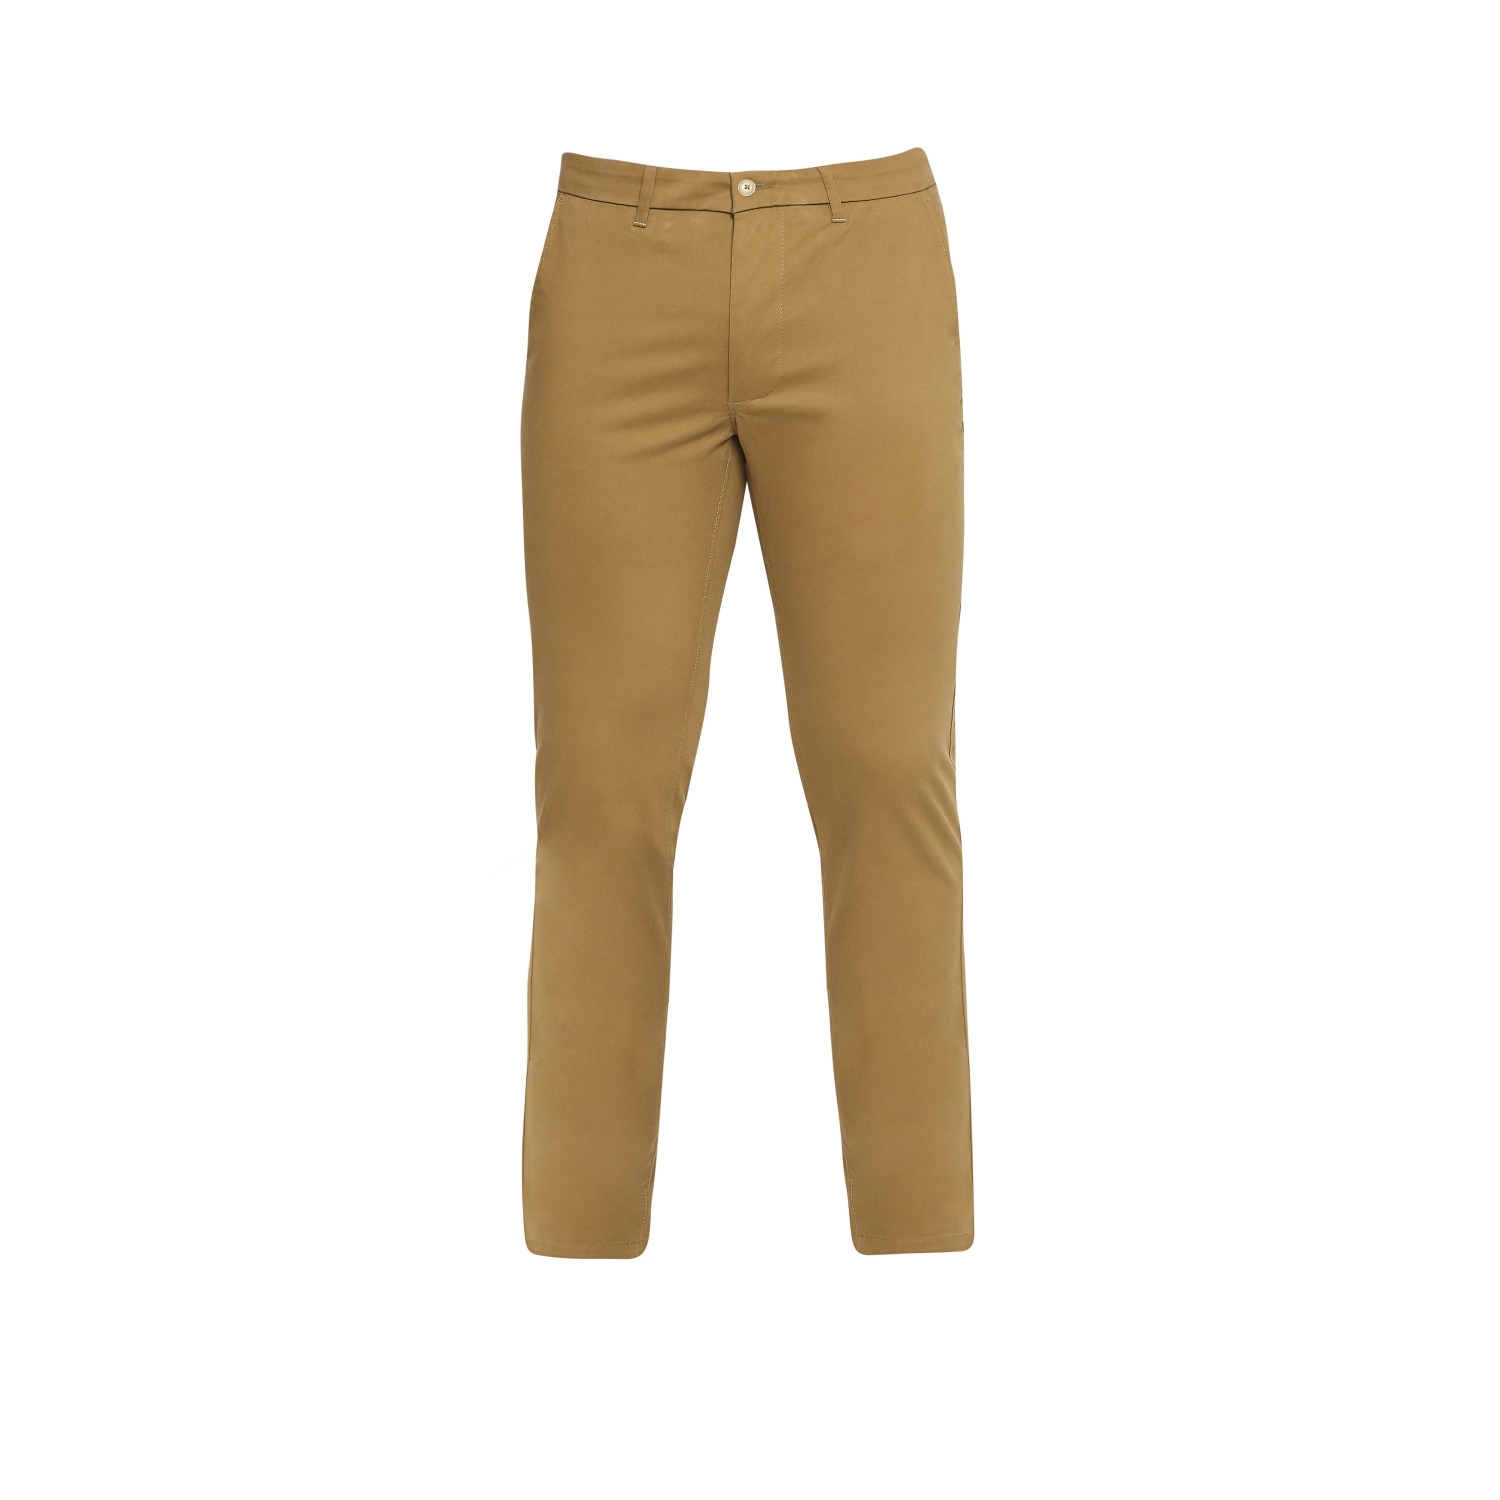 Basics | Men's Khaki Cotton Blend Solid Trouser 5